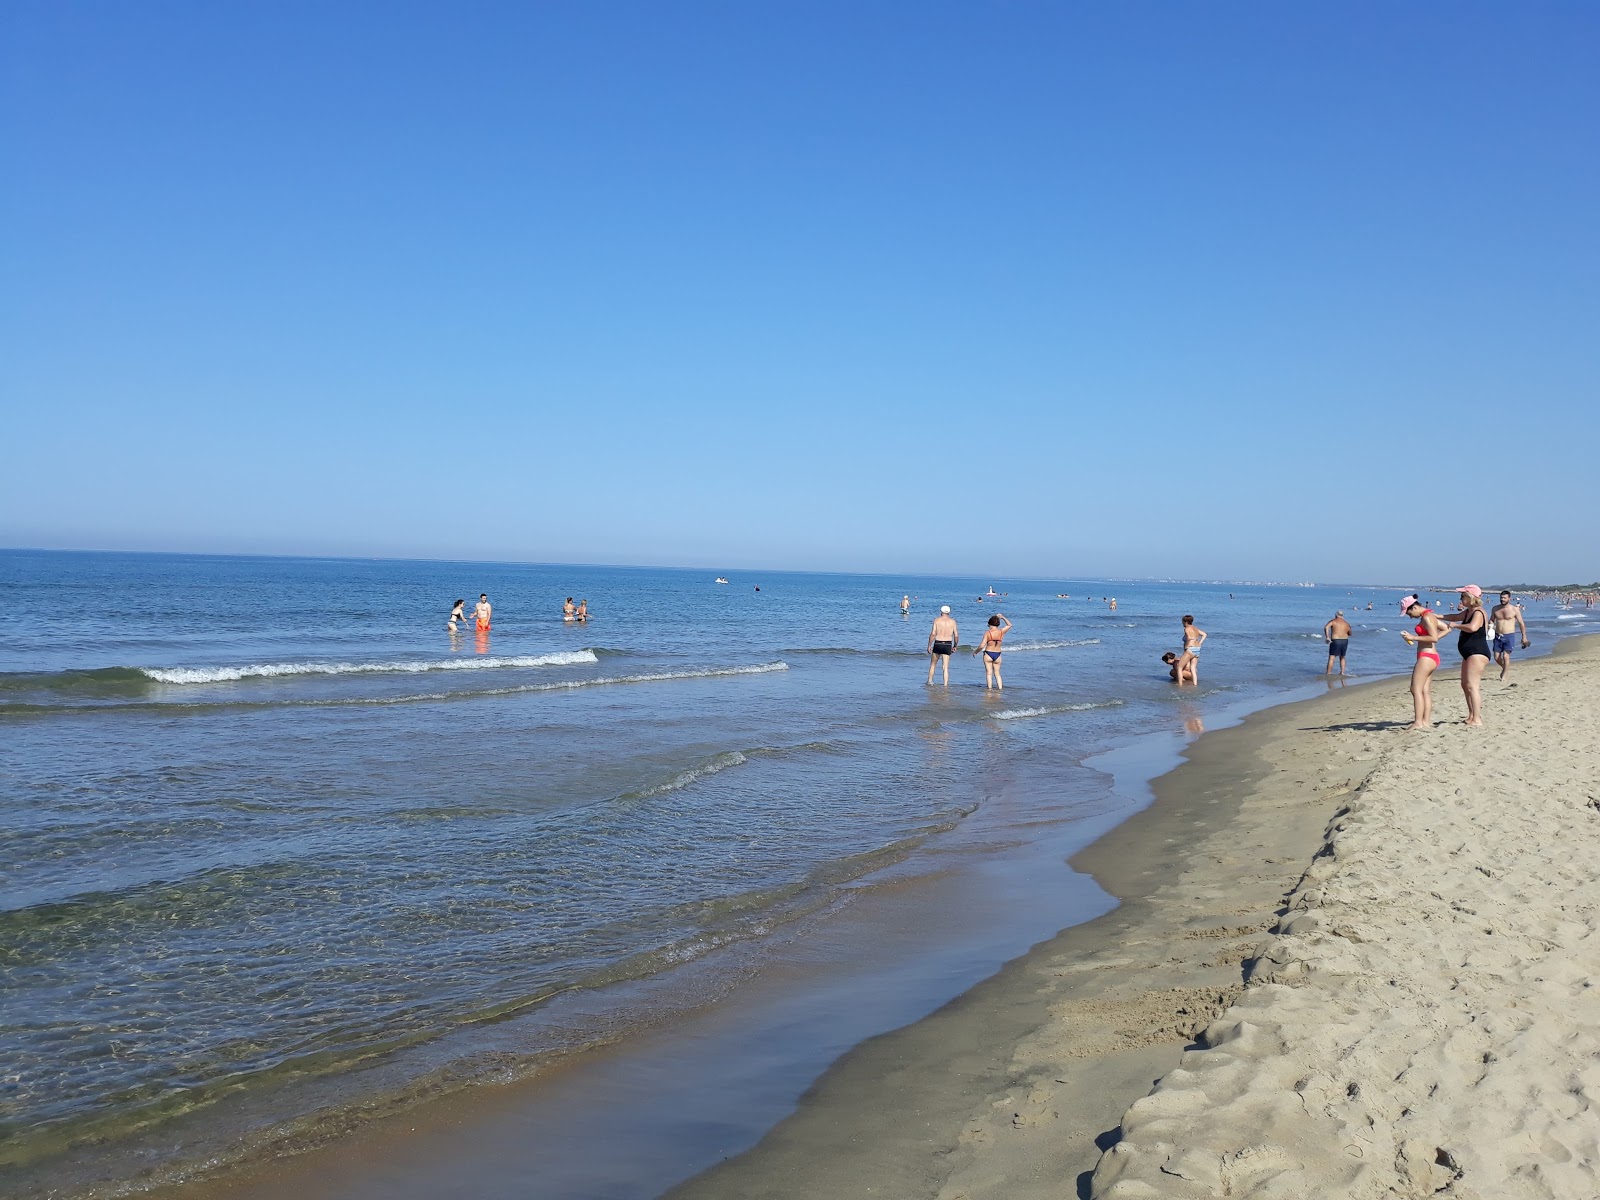 Spiaggia Sabaudia'in fotoğrafı vahşi alan